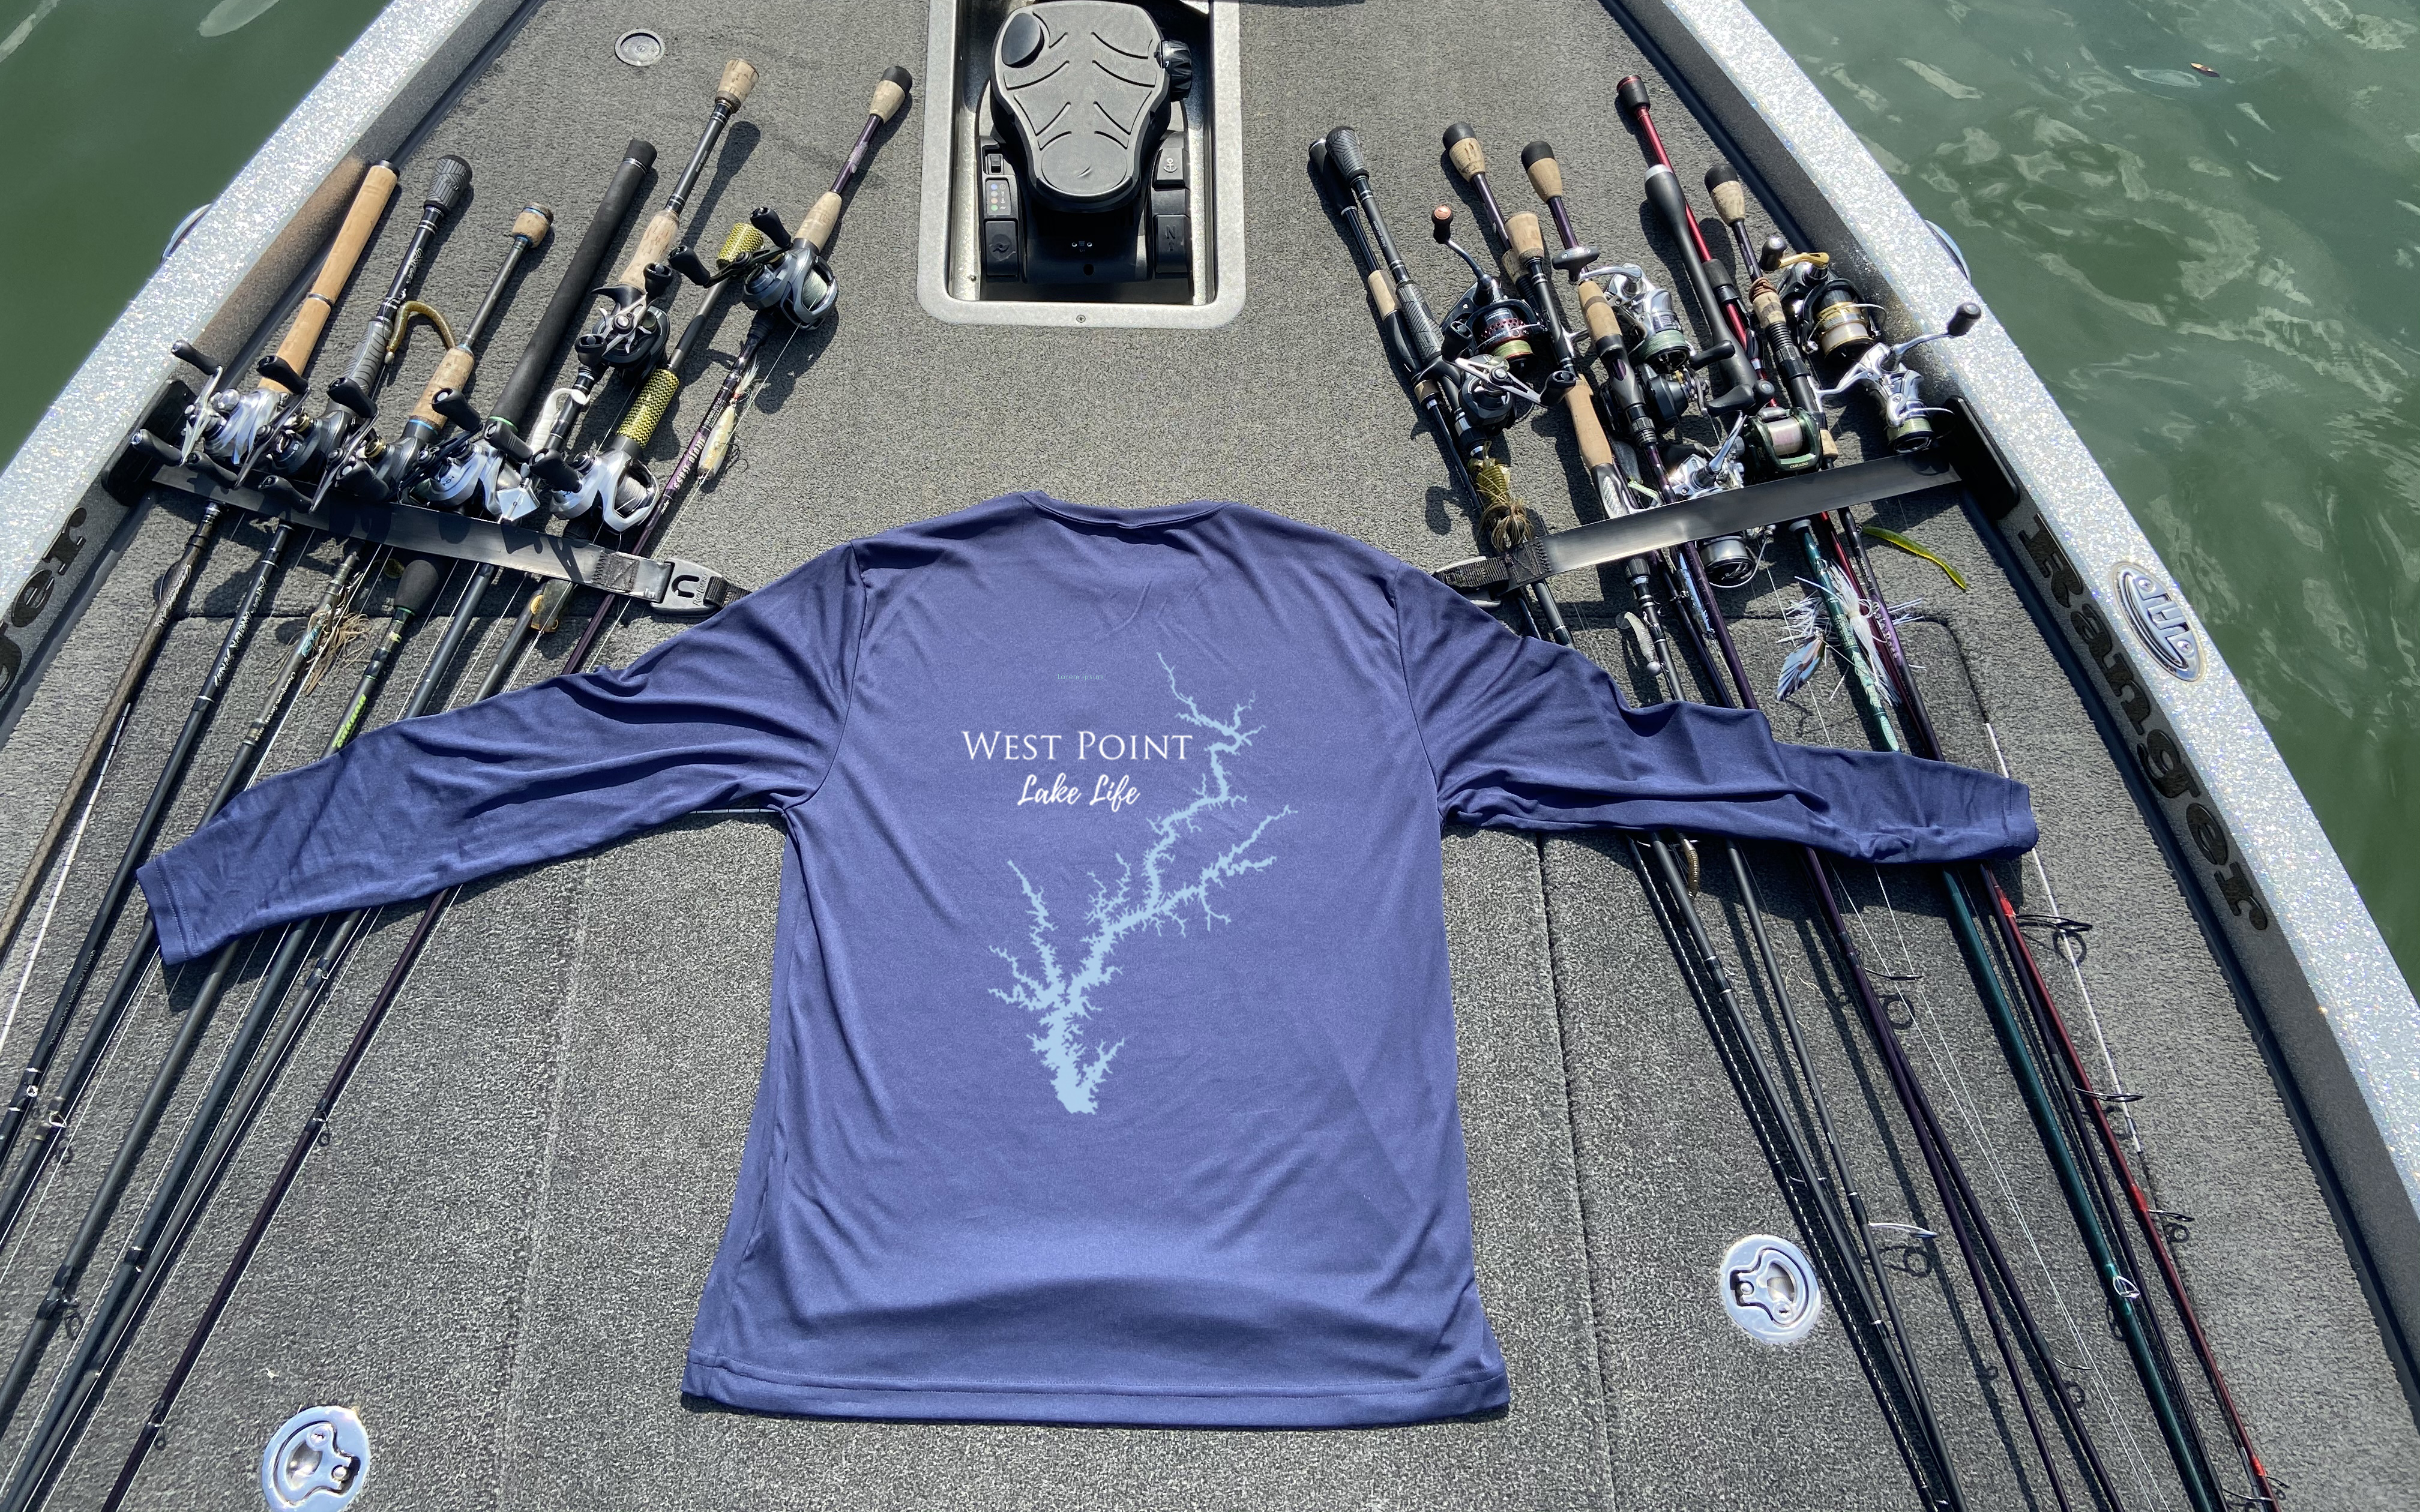 West Point Lake Life Dri-fit Boating Shirt - Breathable Material- Men's Long Sleeve Moisture Wicking Tee - Georgia & Alabama Lake